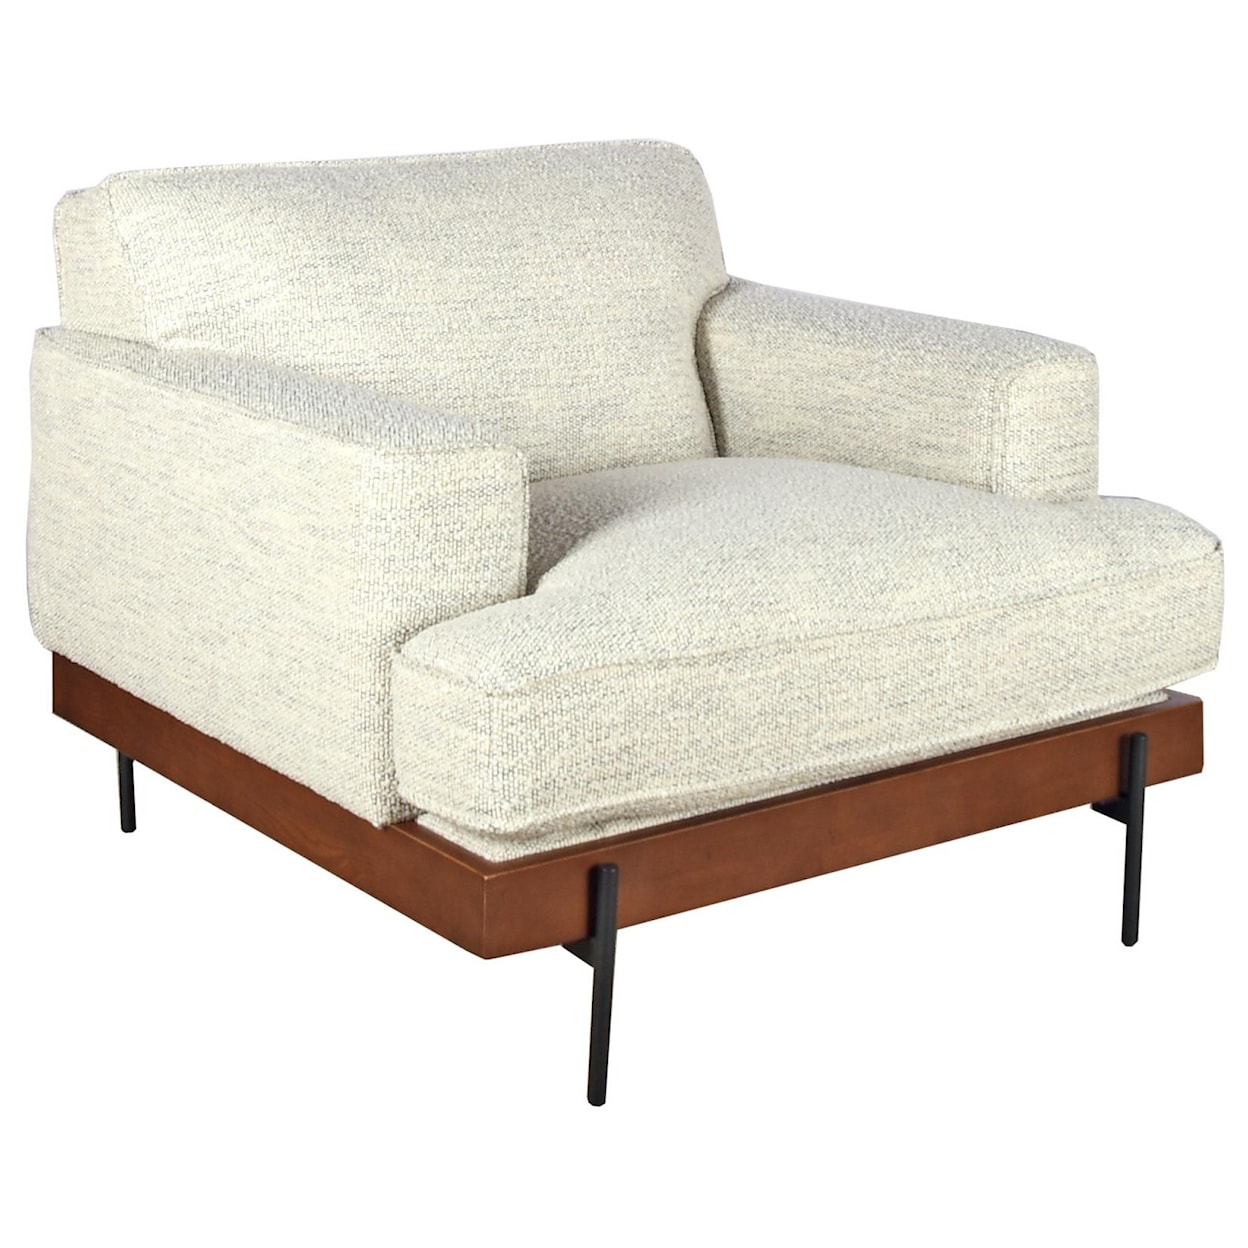 Maric Furniture Merino Industrial Chair